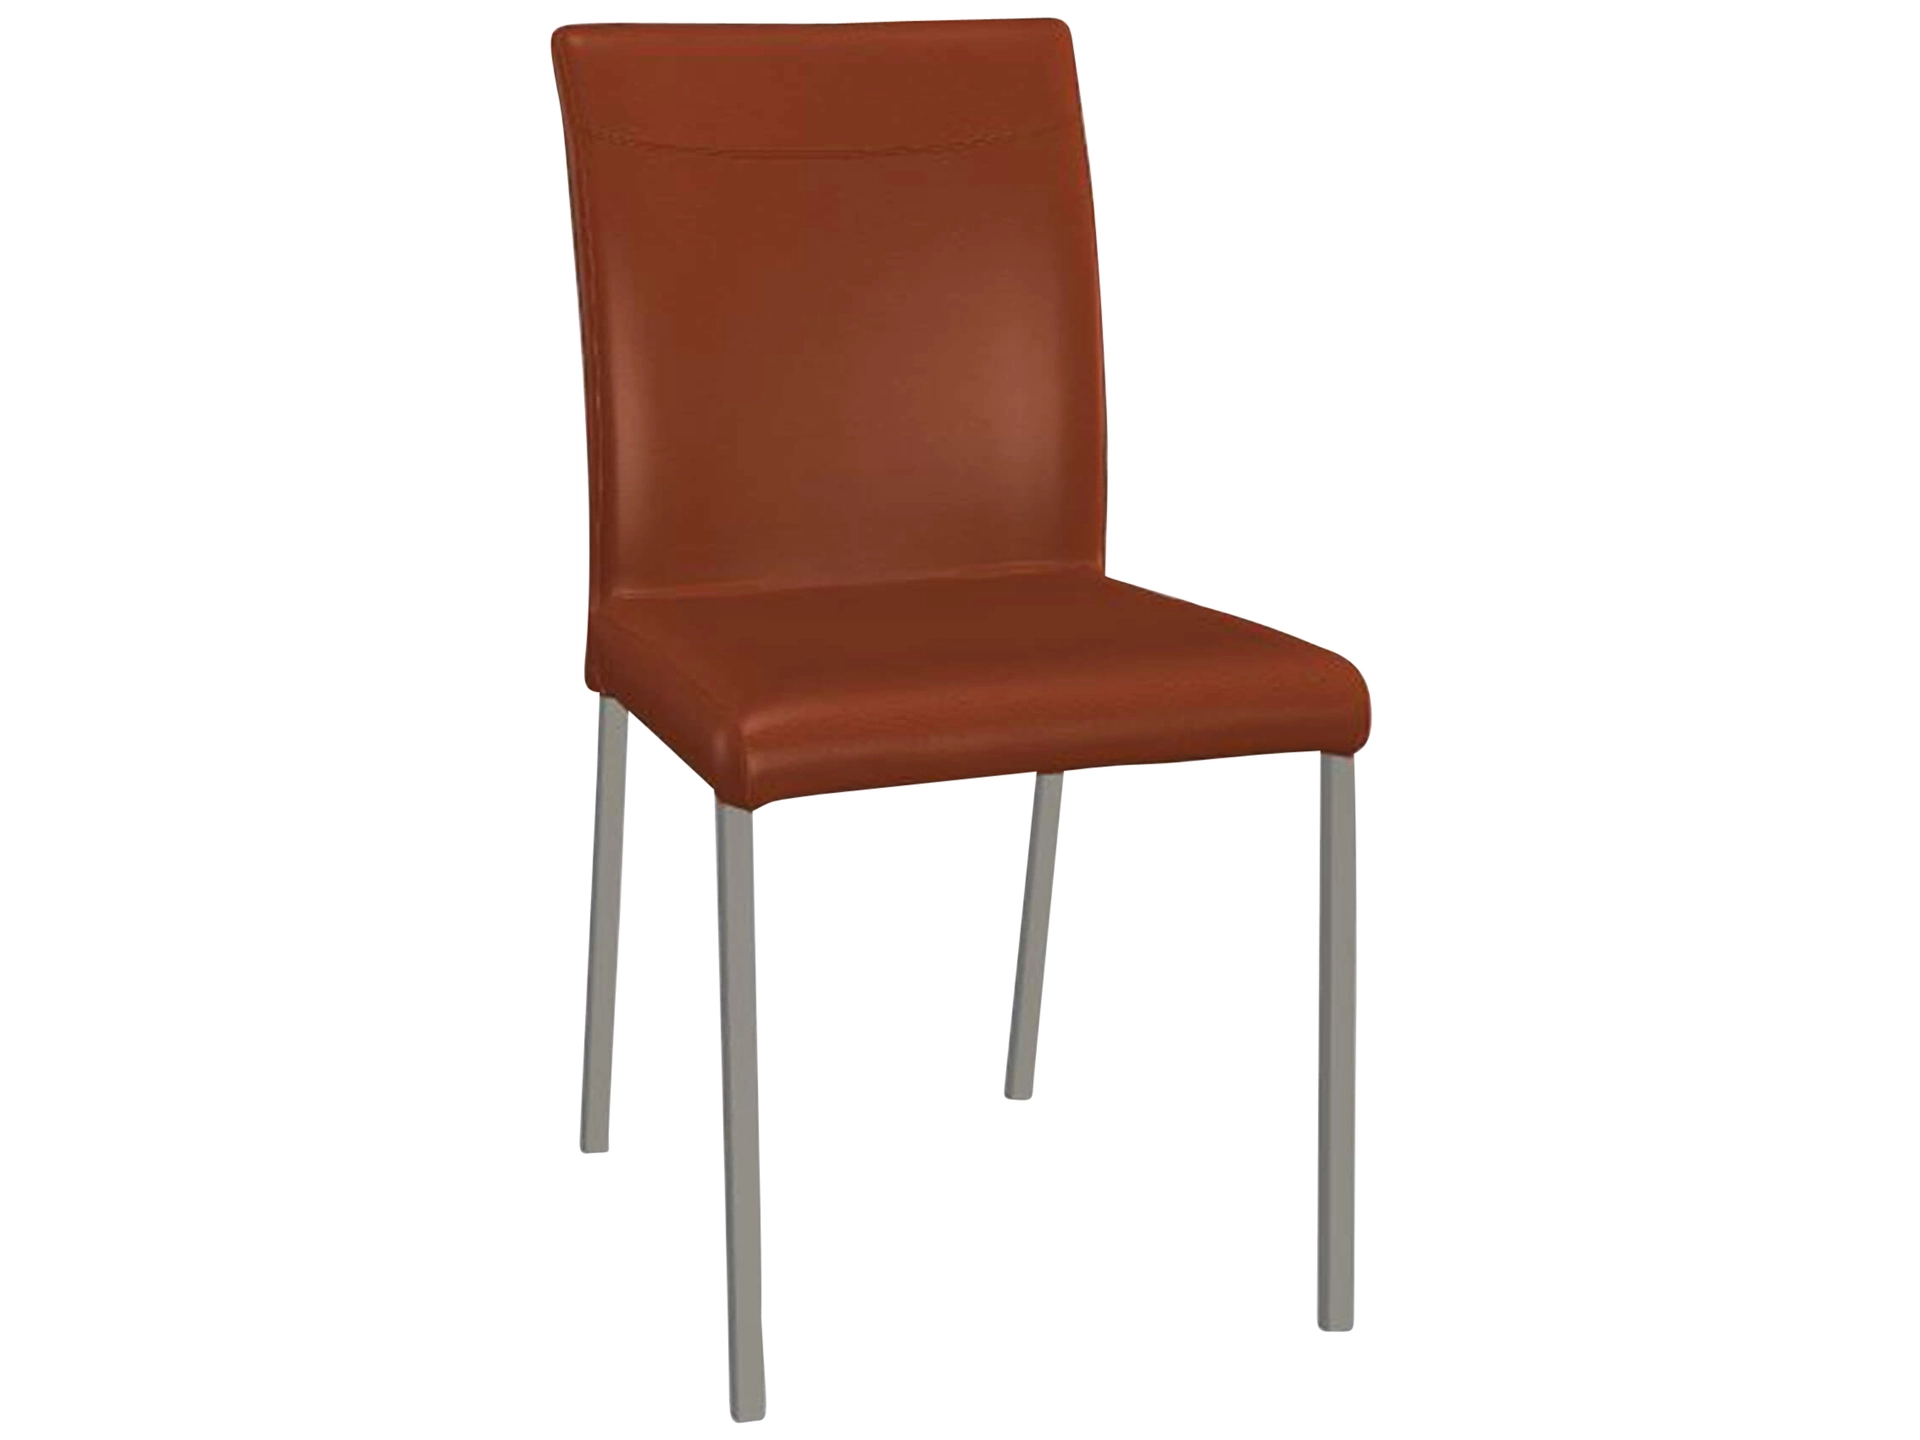 Stuhl Leicht Premium Trendstühle / Farbe: Cotto / Material: Leder